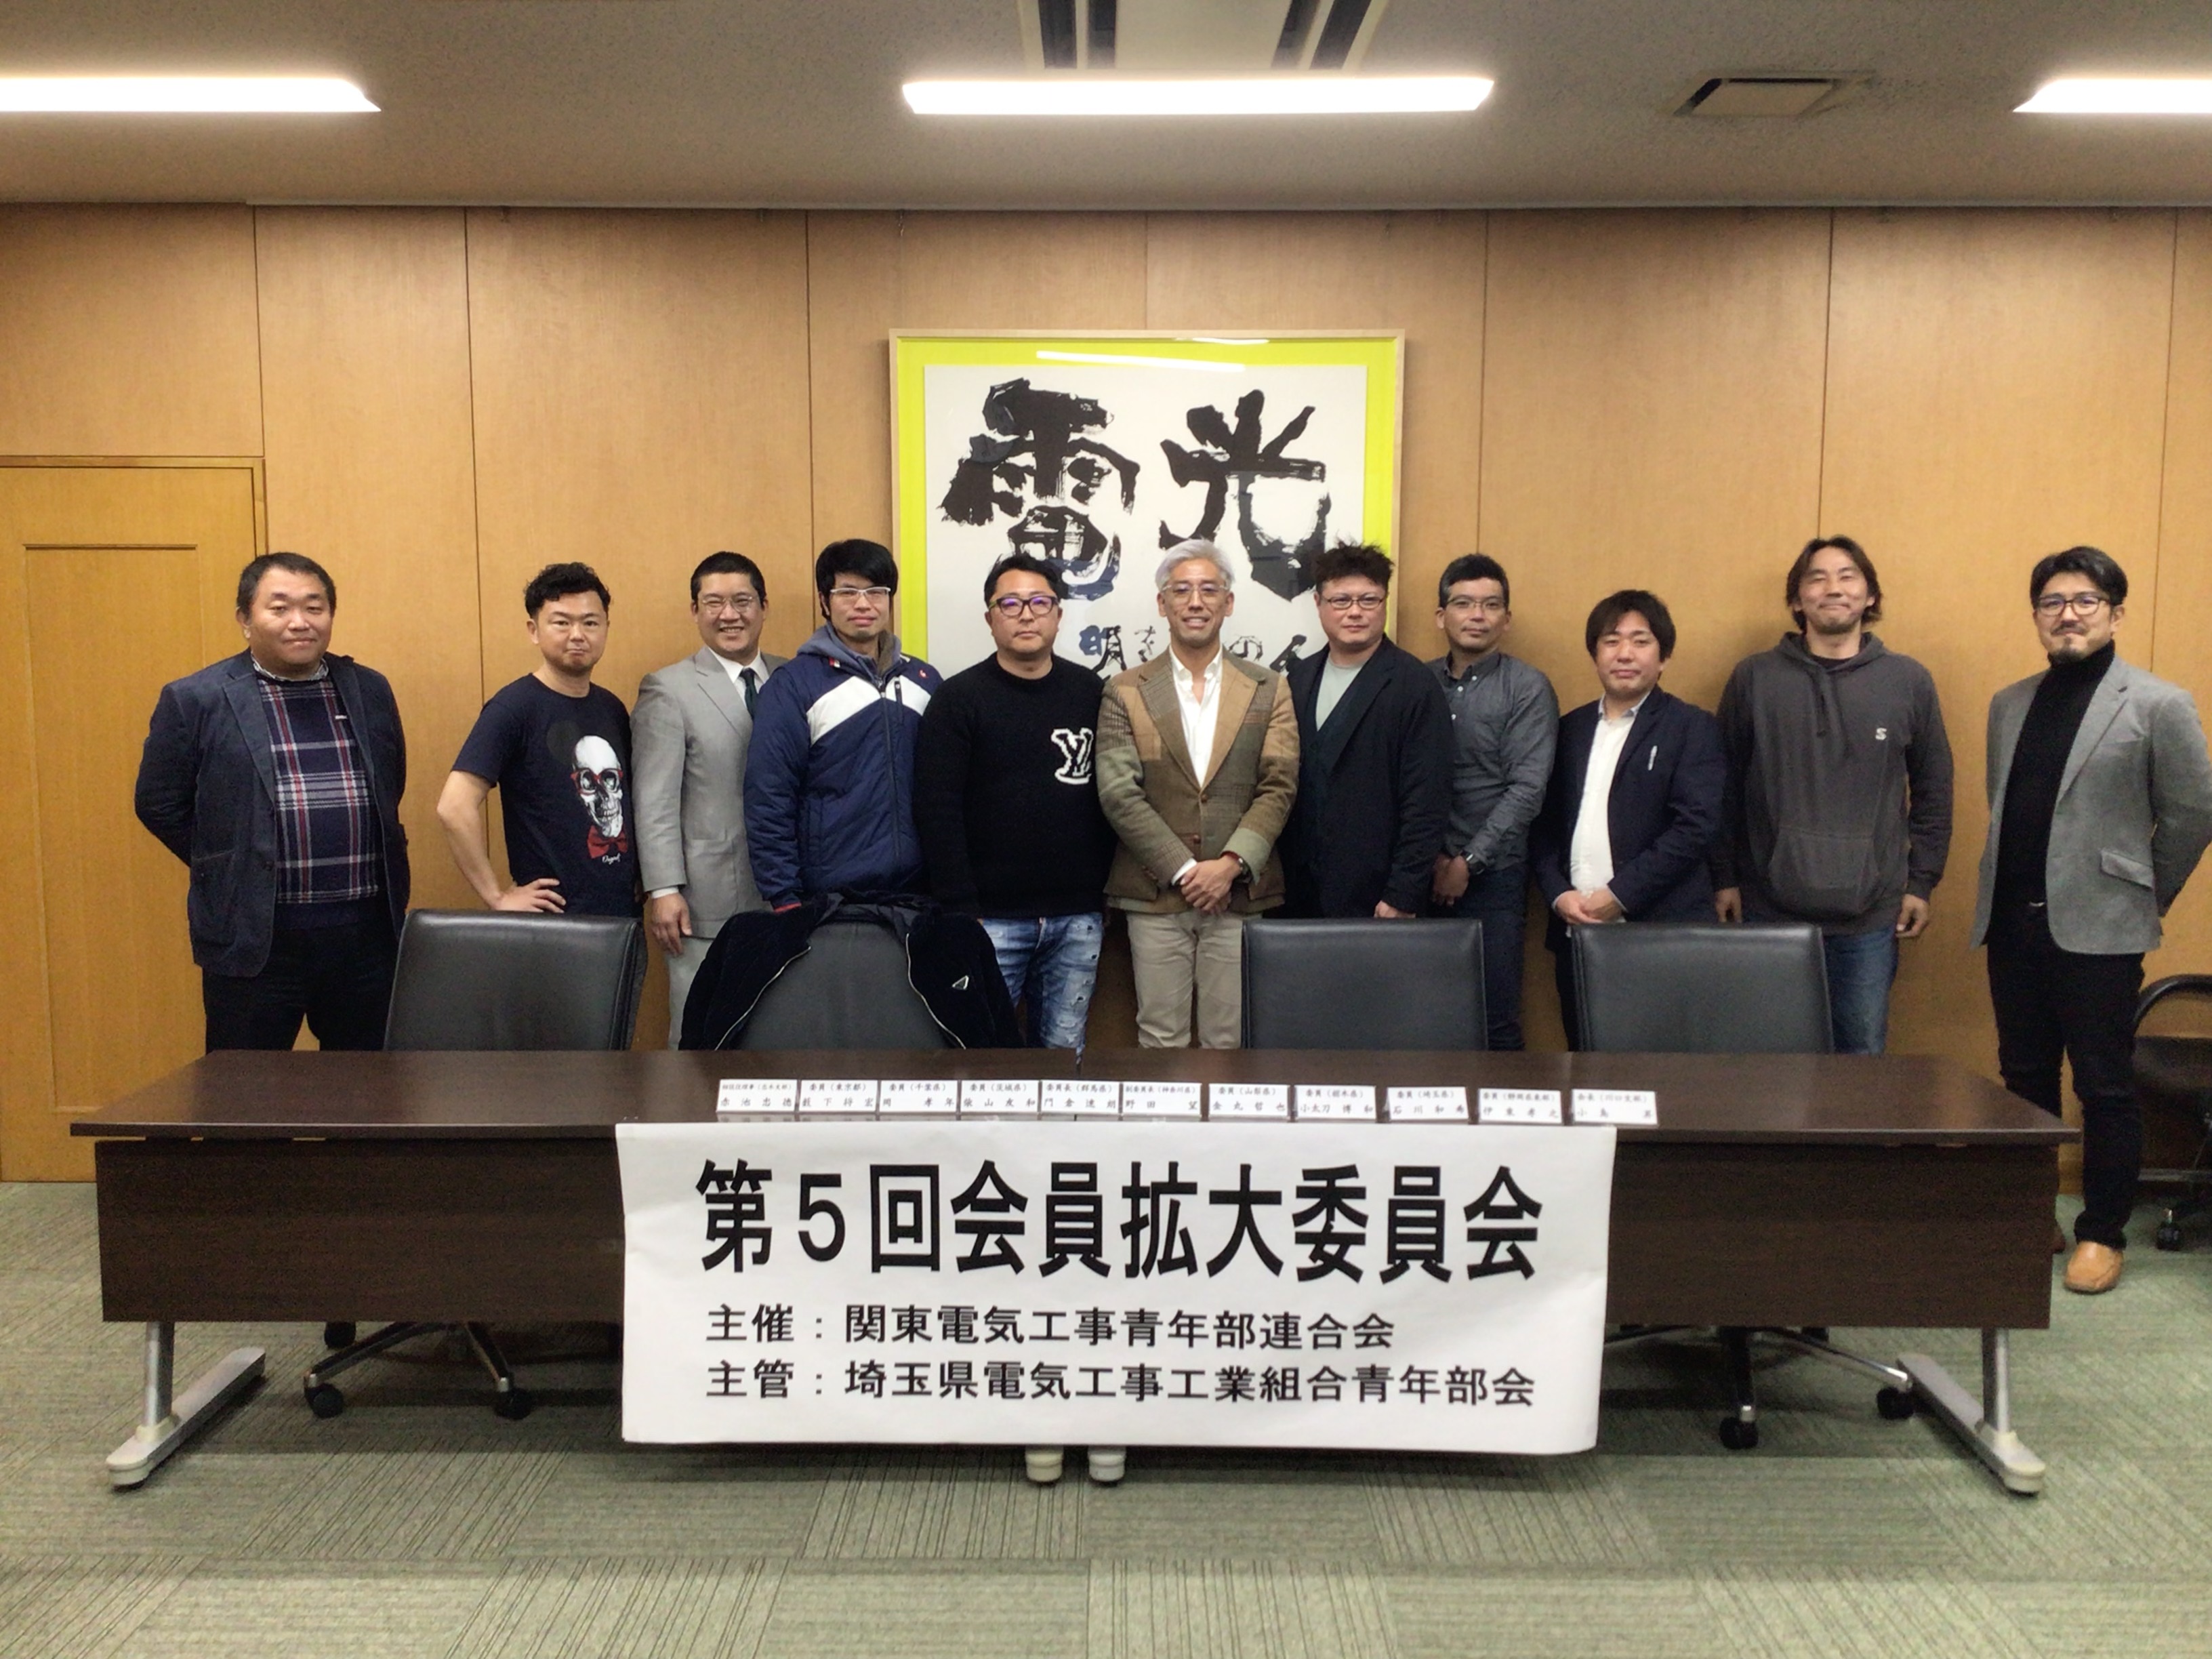 埼玉県主管で関青連第5回会員拡大委員会を開催のイメージ